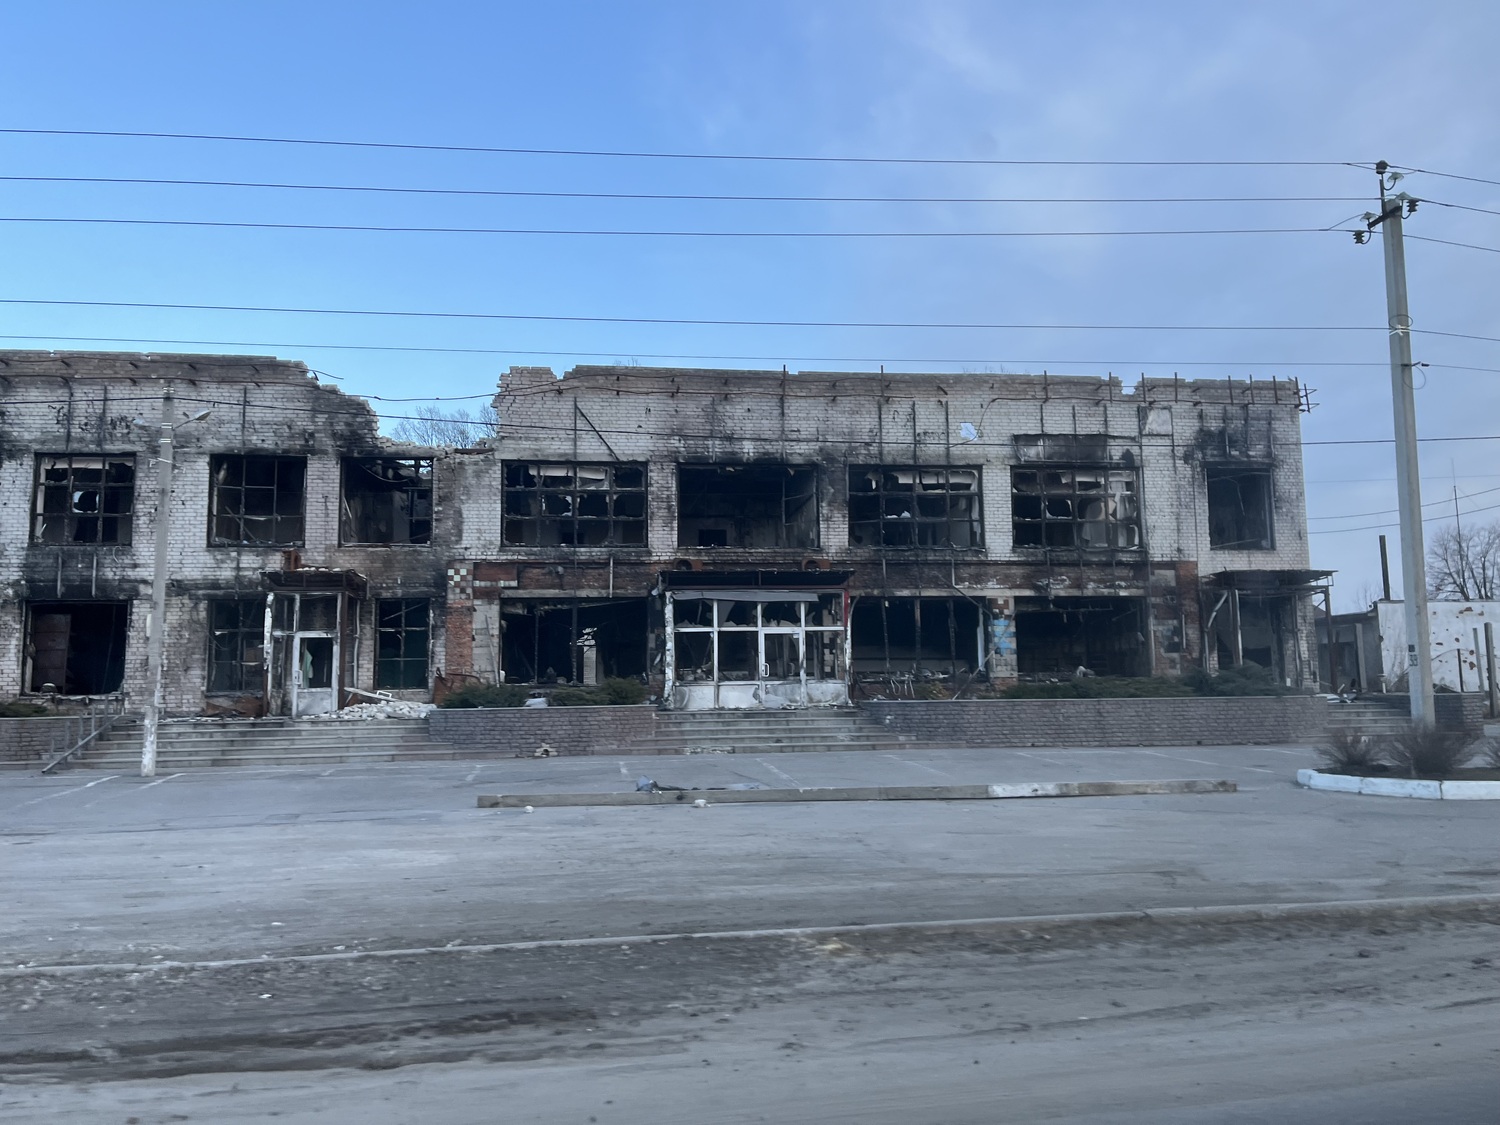 A badly damaged building in Ukraine. COURTESY JOHN REILLY